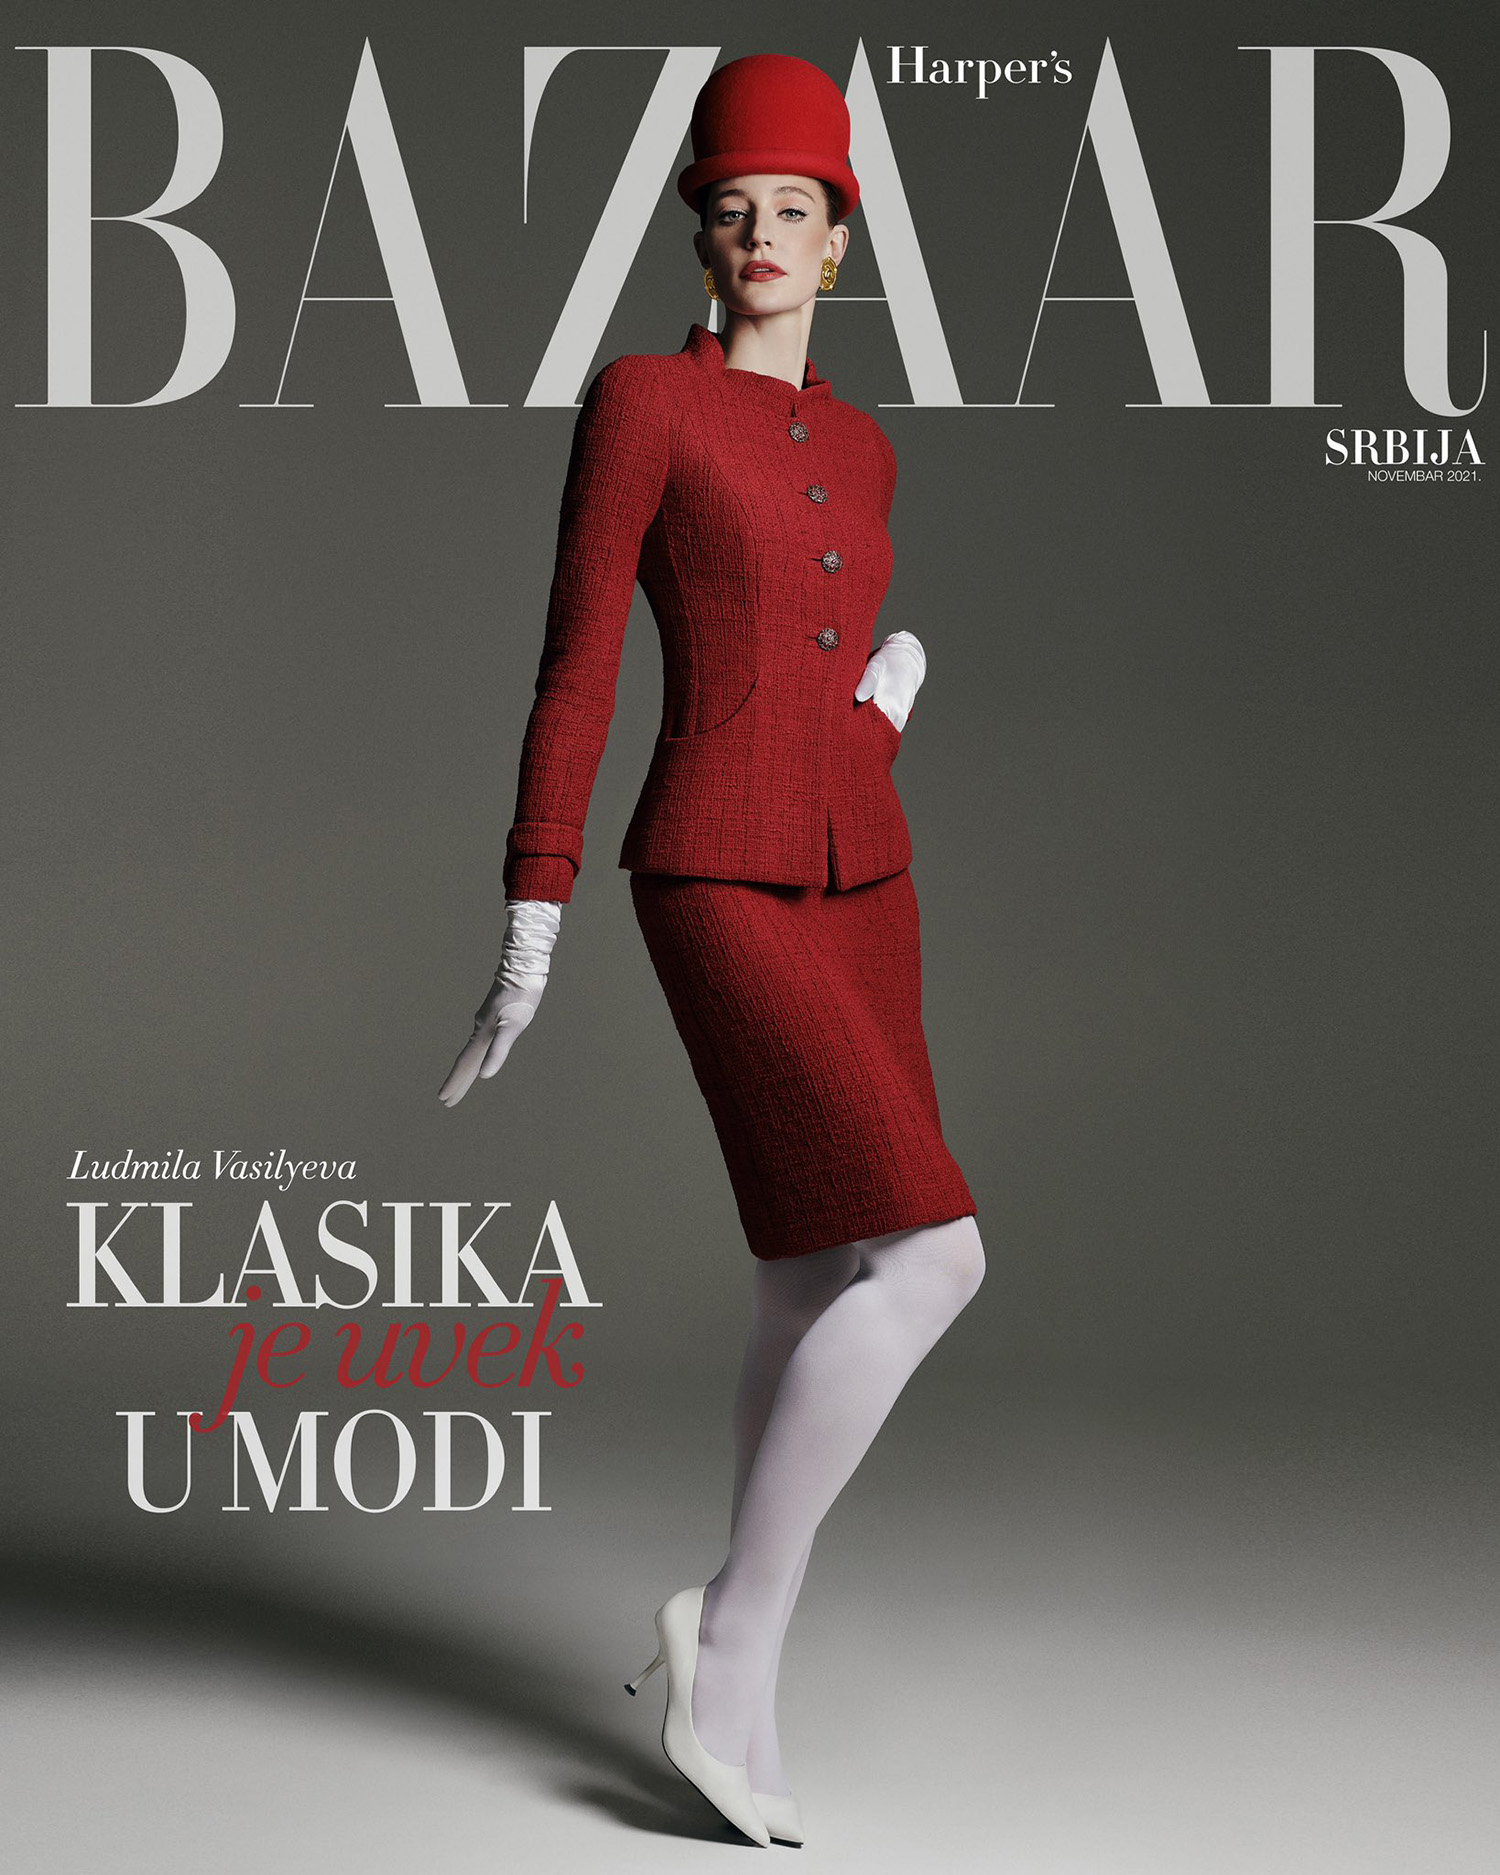 Ludmila Vasilyeva covers Harper’s Bazaar Serbia November 2021 Digital Edition by Amer Mohamad